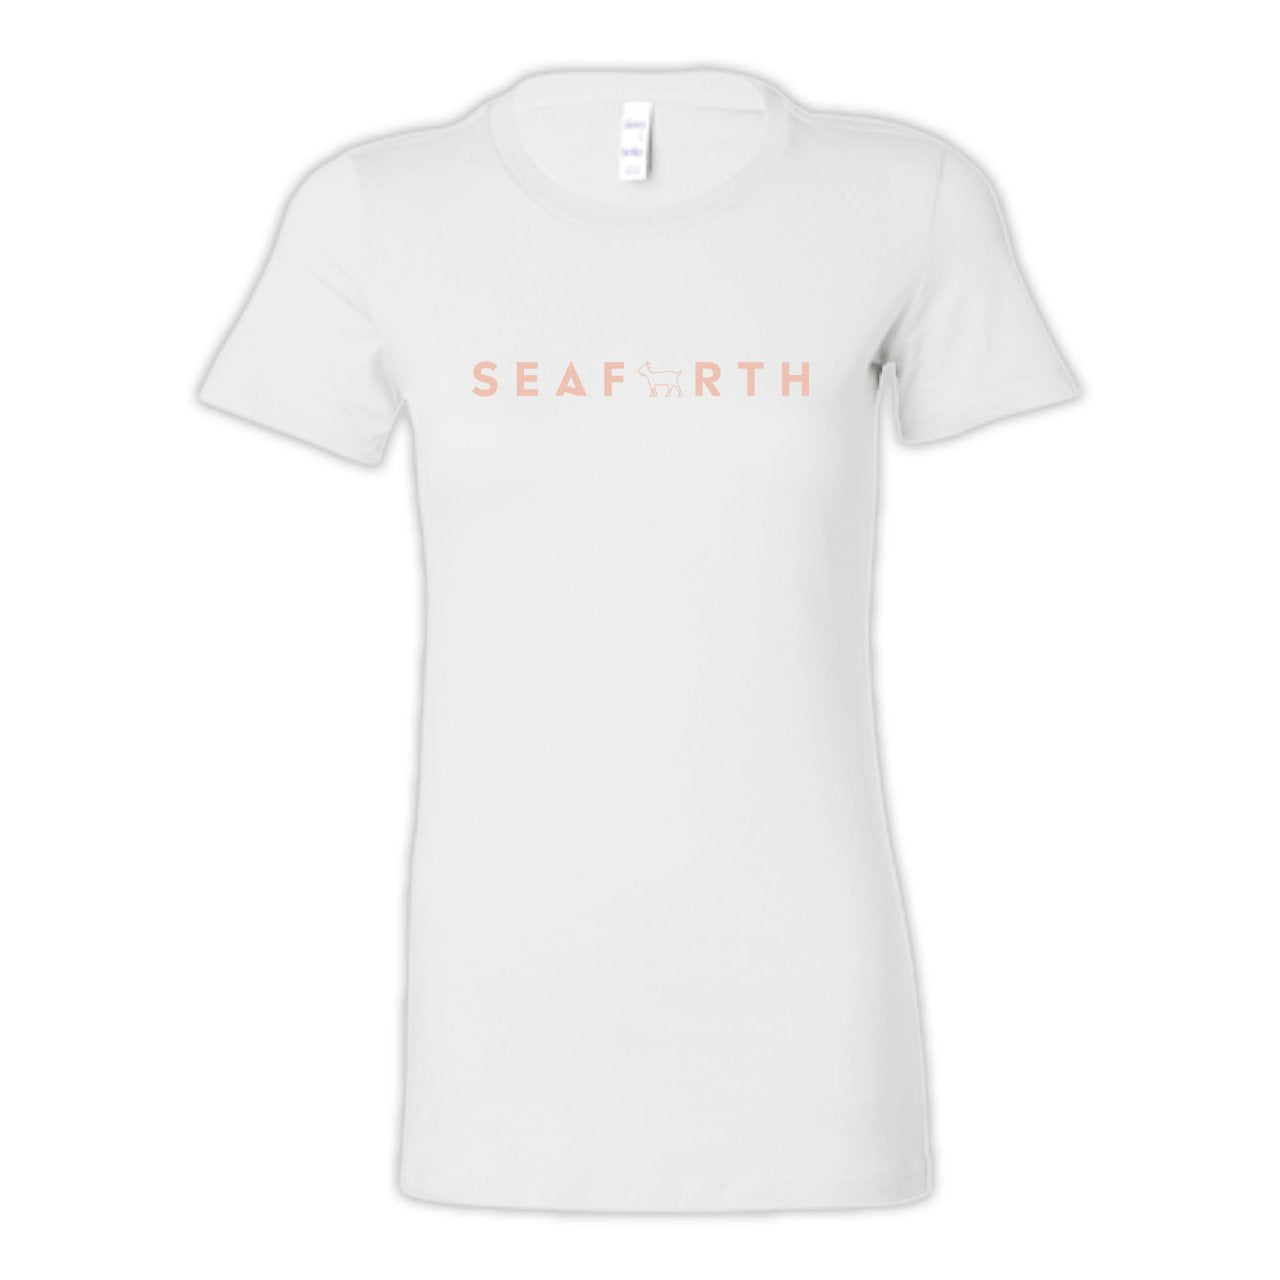 Seaforth White T-Shirt